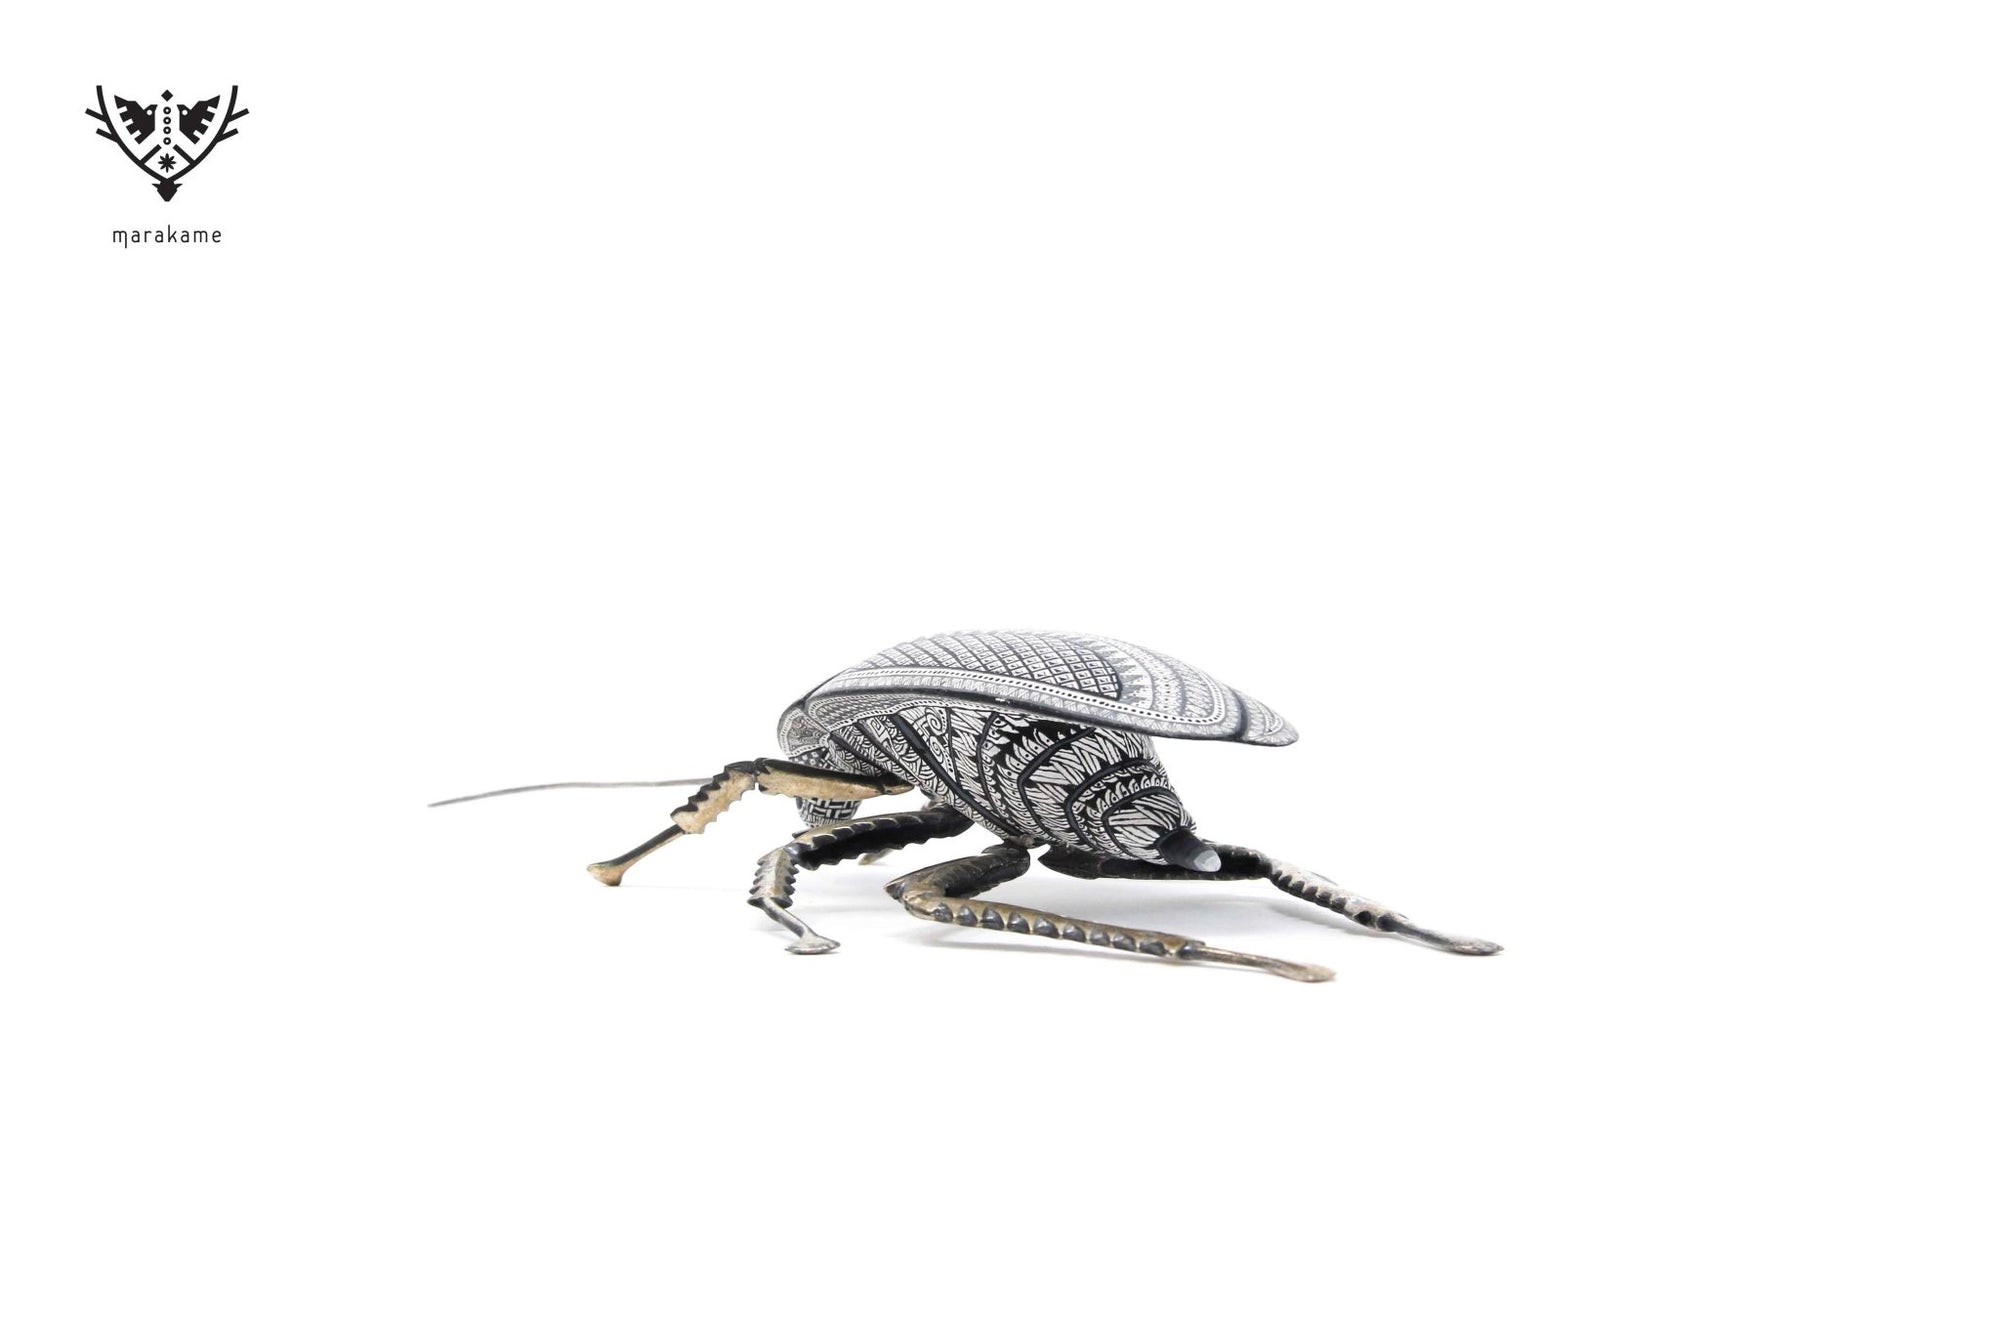 Cockroach - Mani 'naquichi' VII - Huichol Art - Marakame